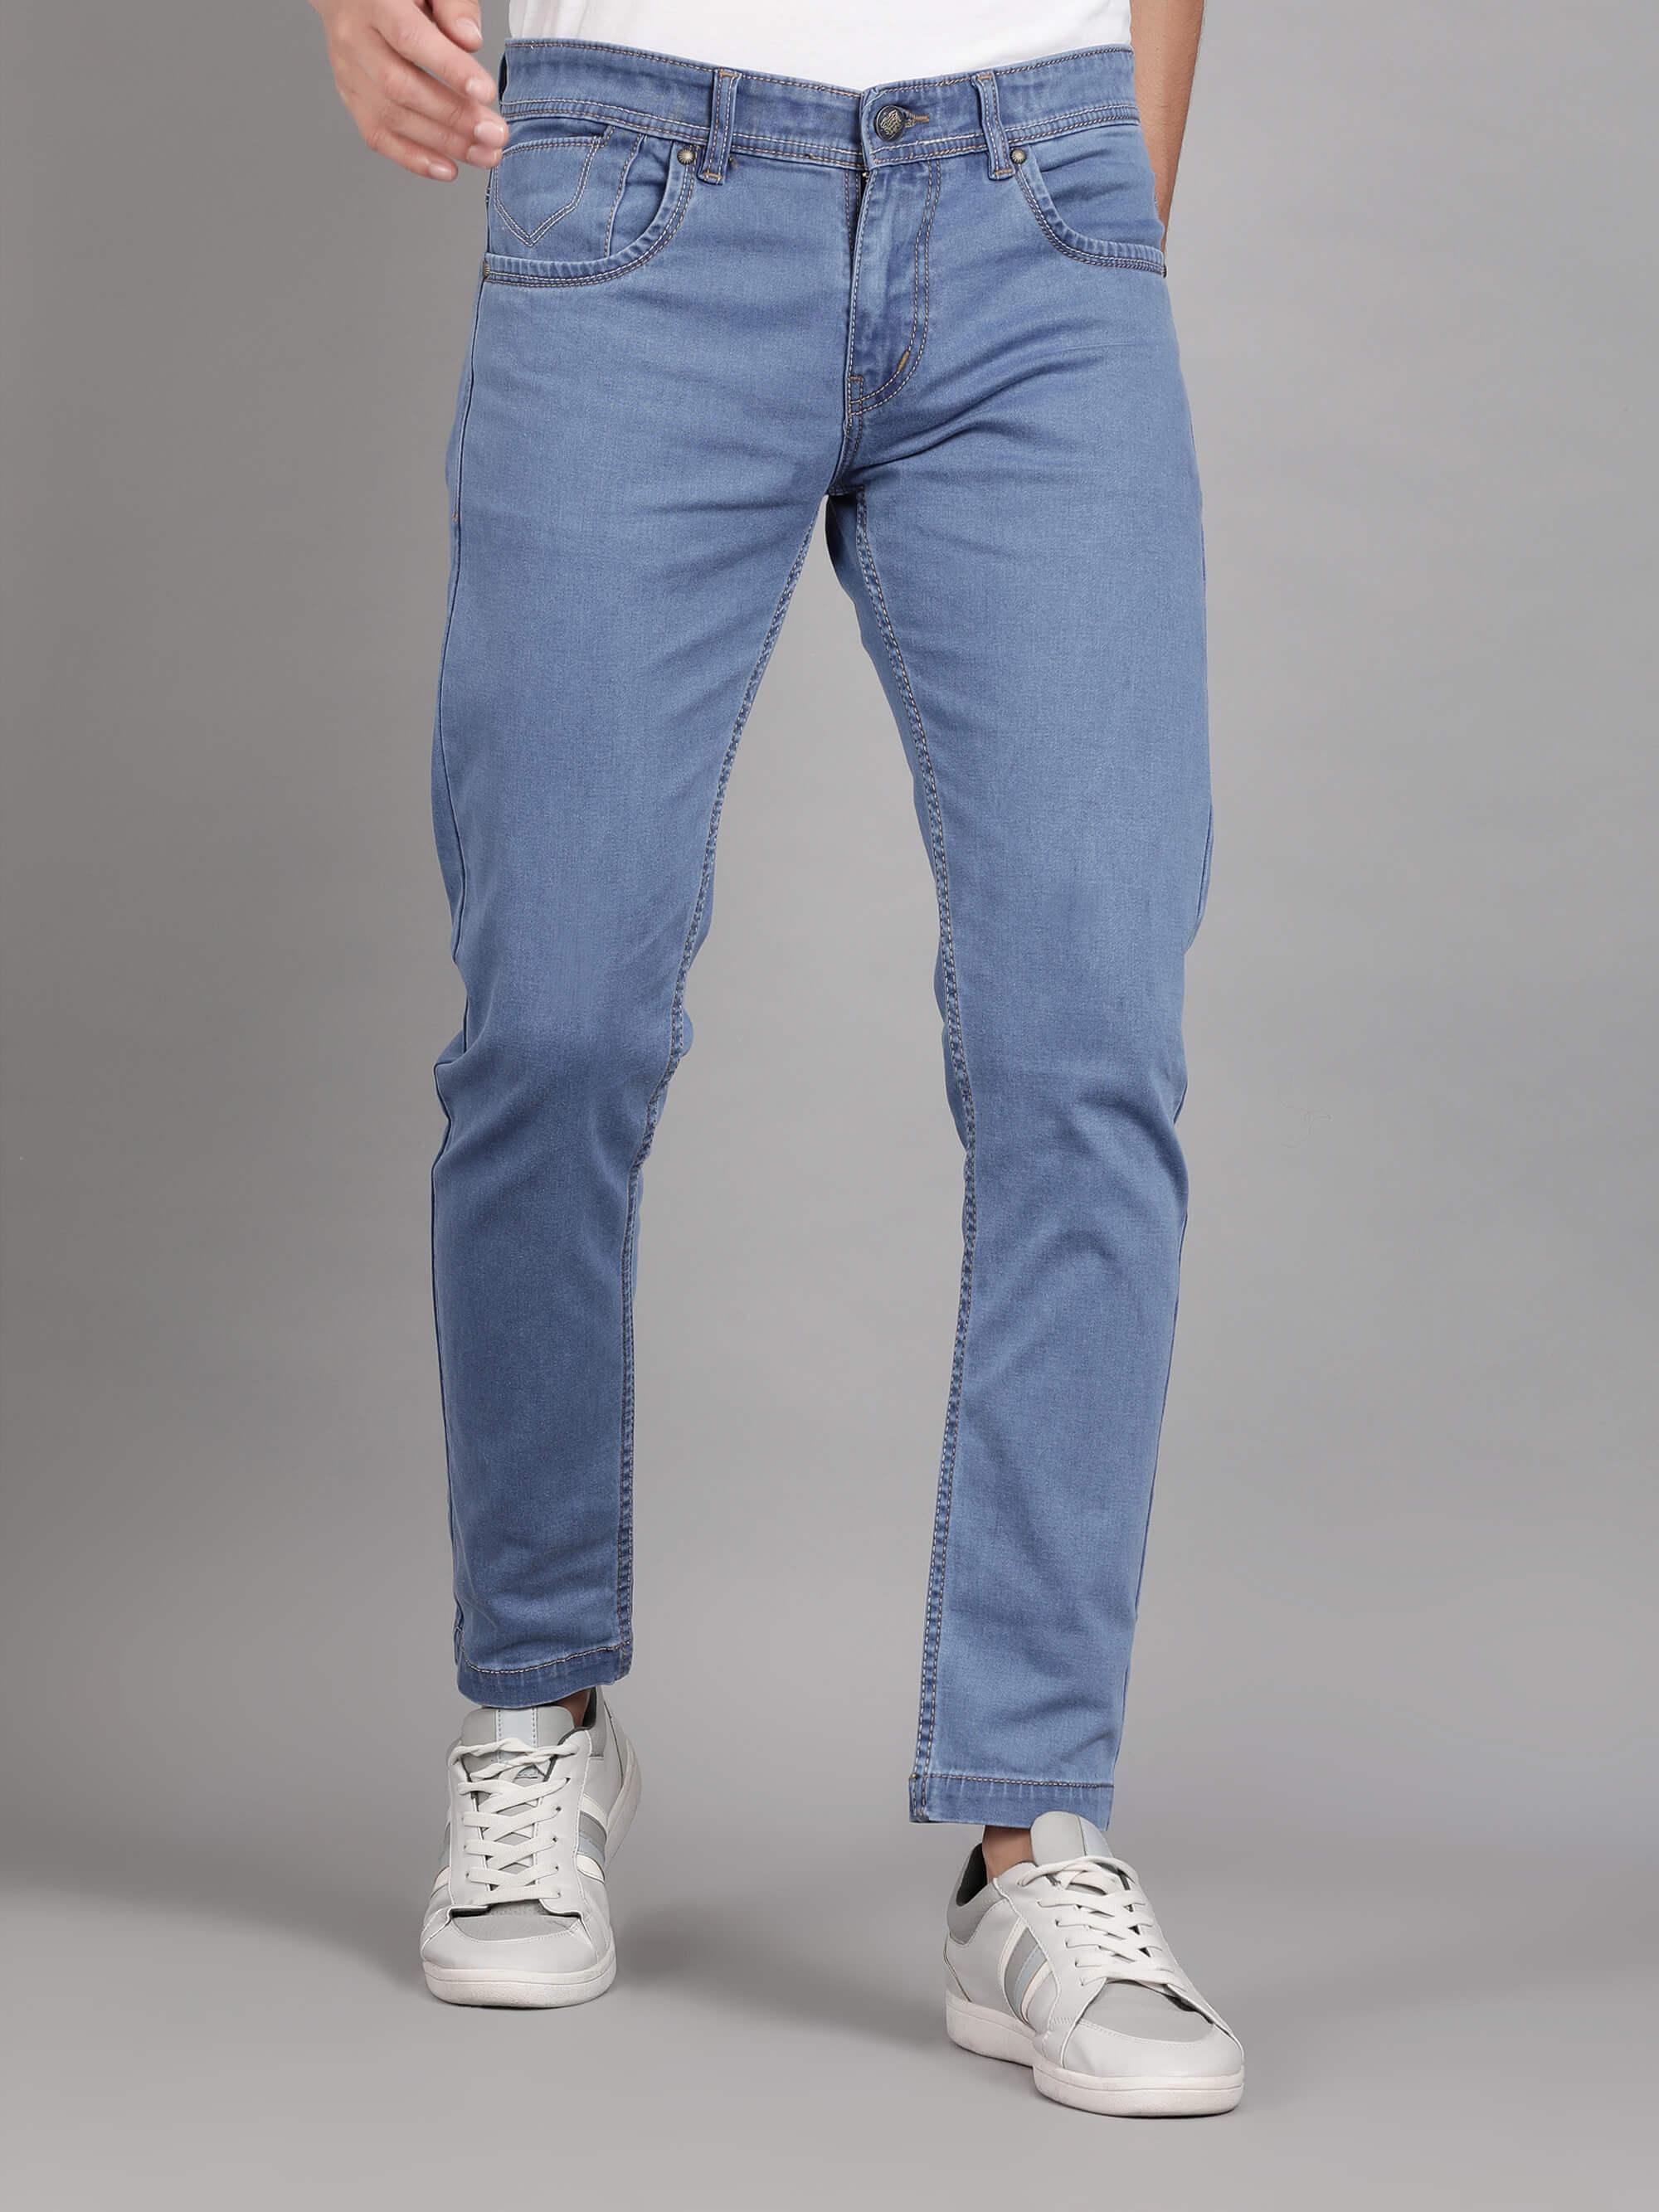 Buy Vintage Blue Jeans Wear Light Blue Jeans - Jeans for Men 947305 | Myntra